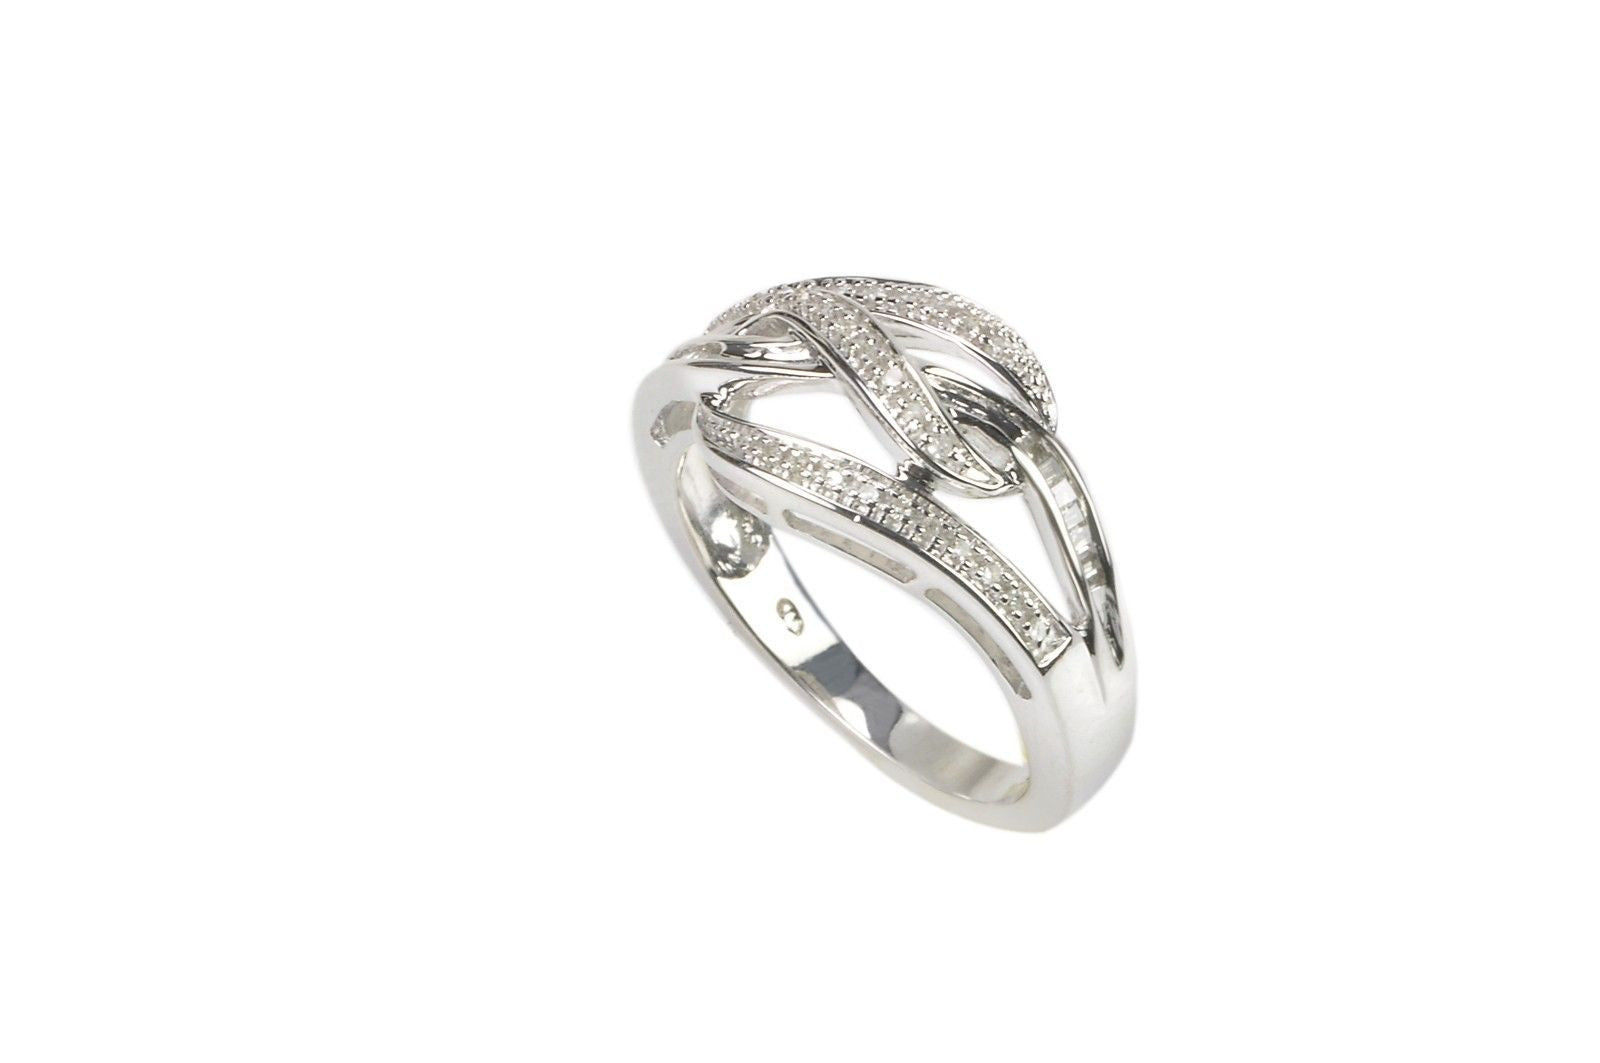 1-17 US Size Wedding Ring Band Ring Sizer Measure Genuine Tester Finger  Gauge | eBay